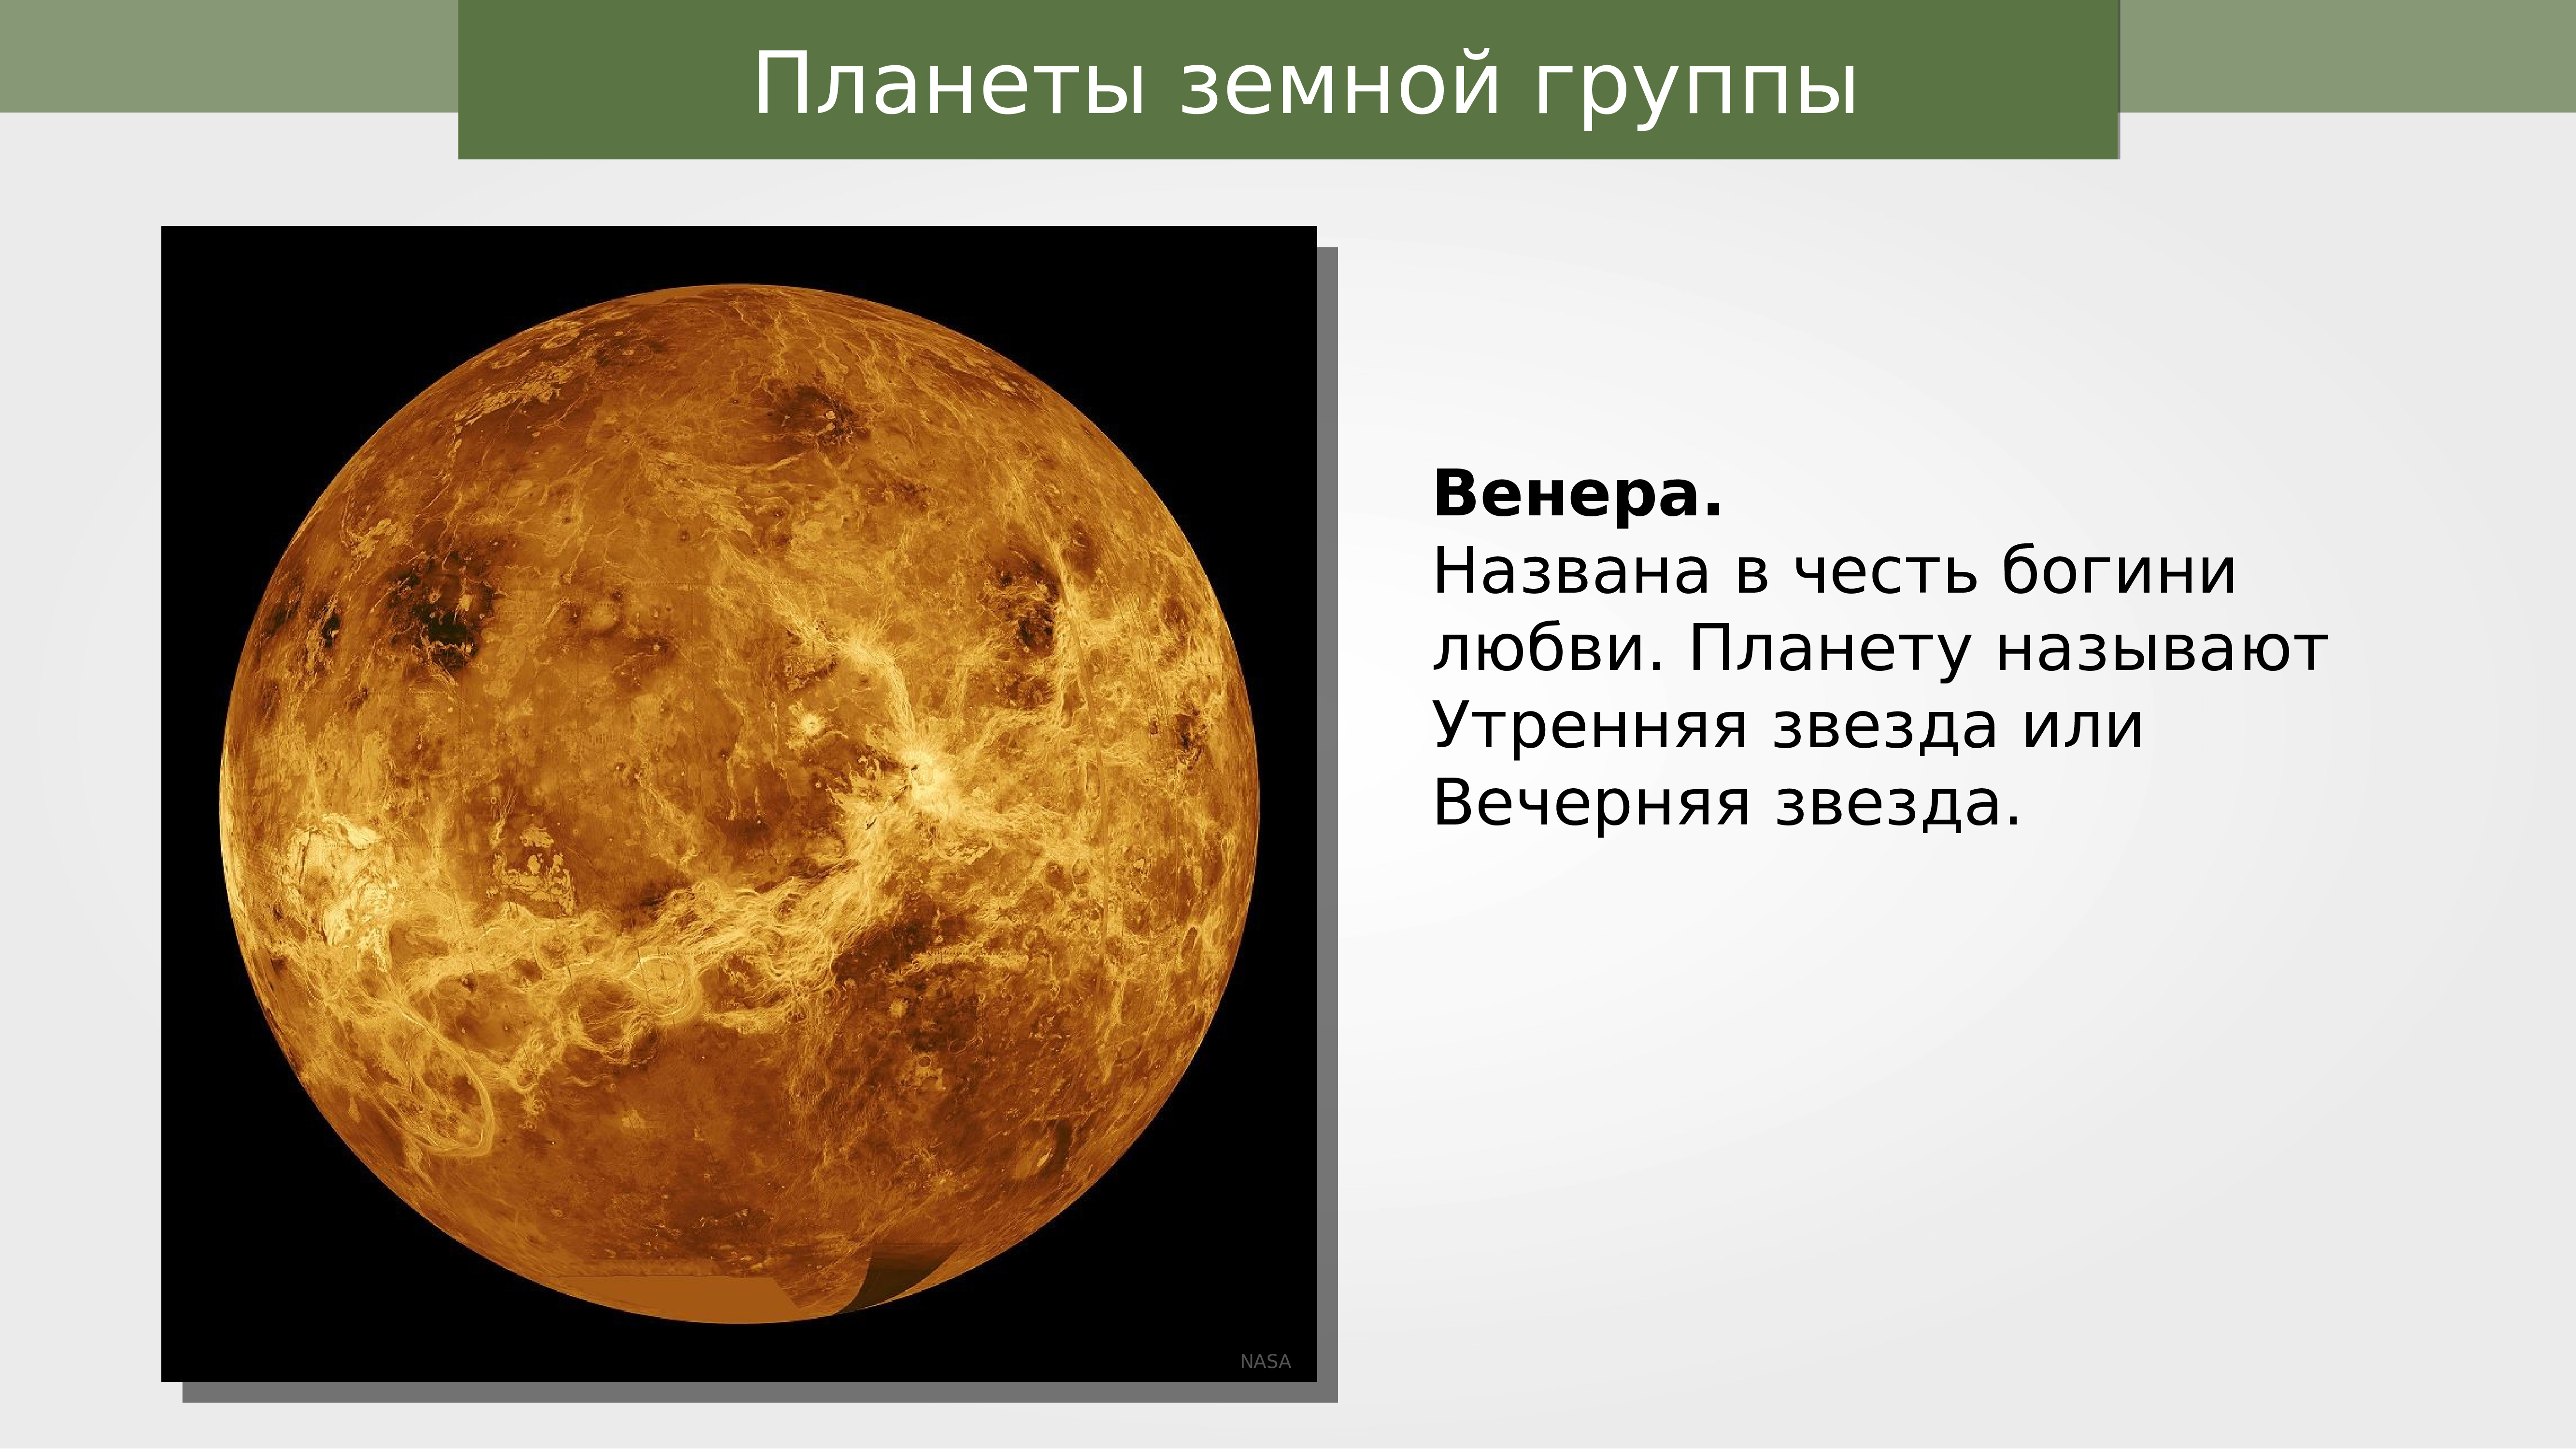 Венера Планета с названием